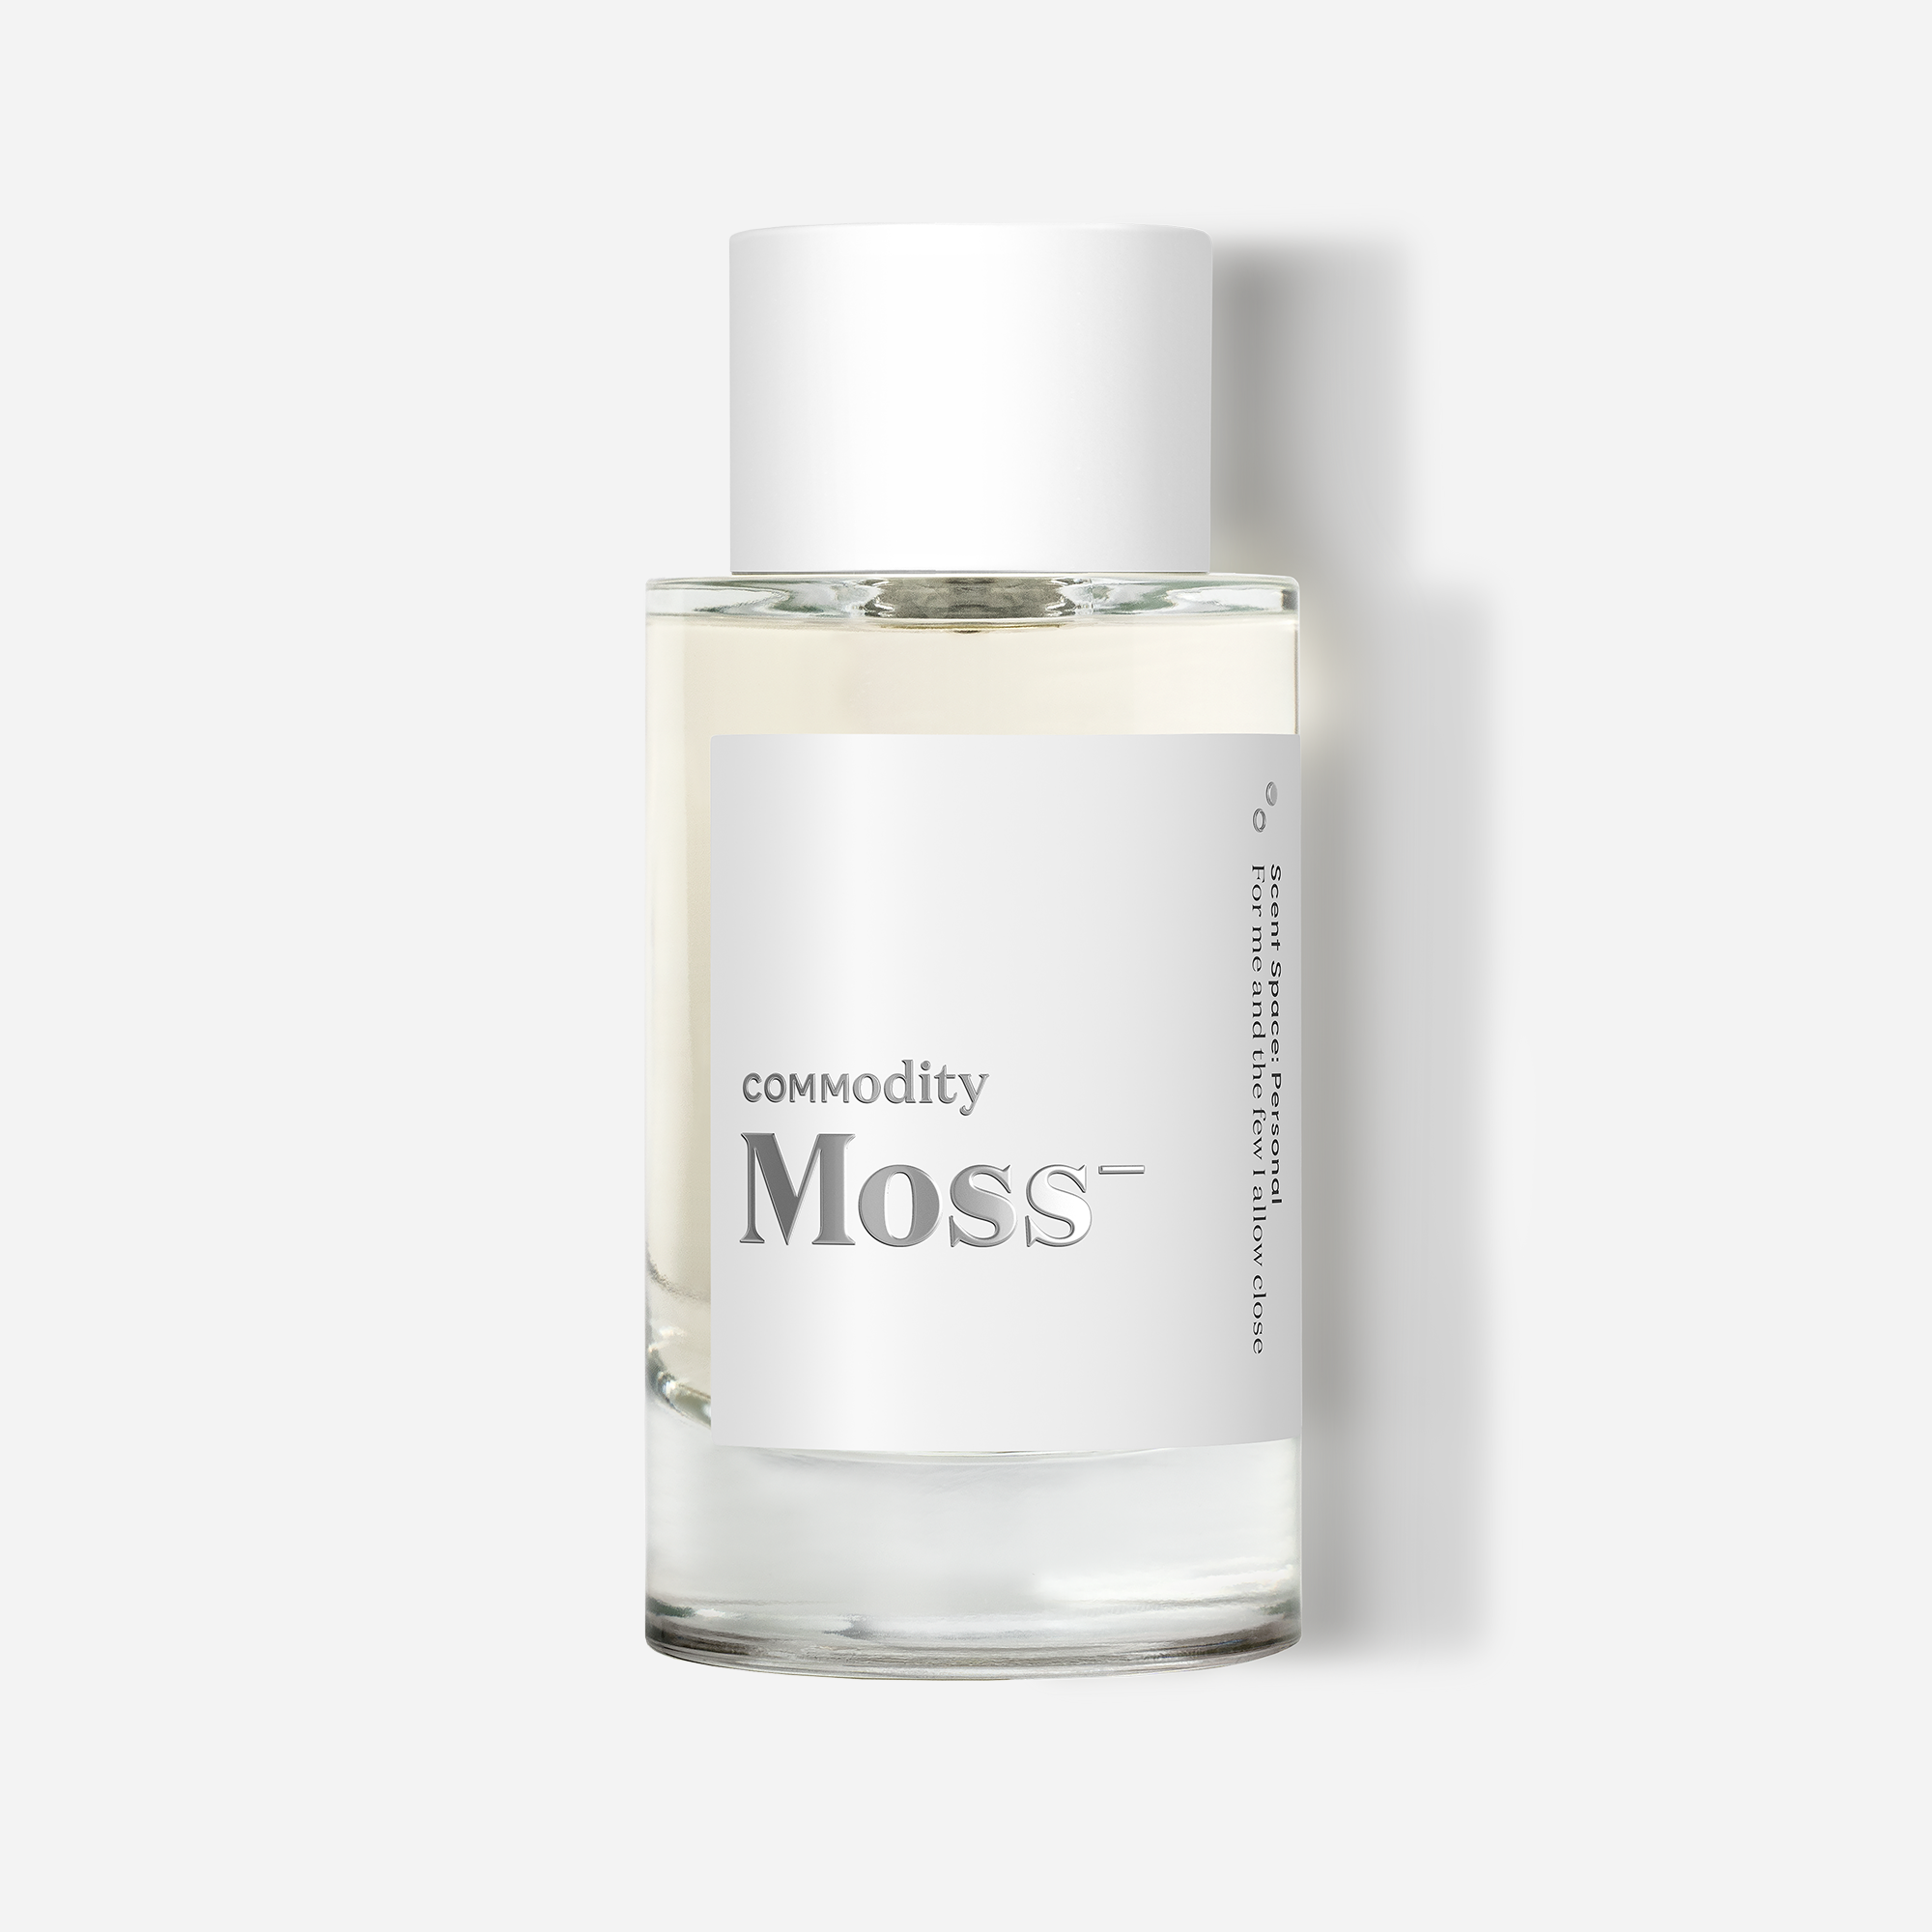 Moss- – Commodity Fragrances (US)